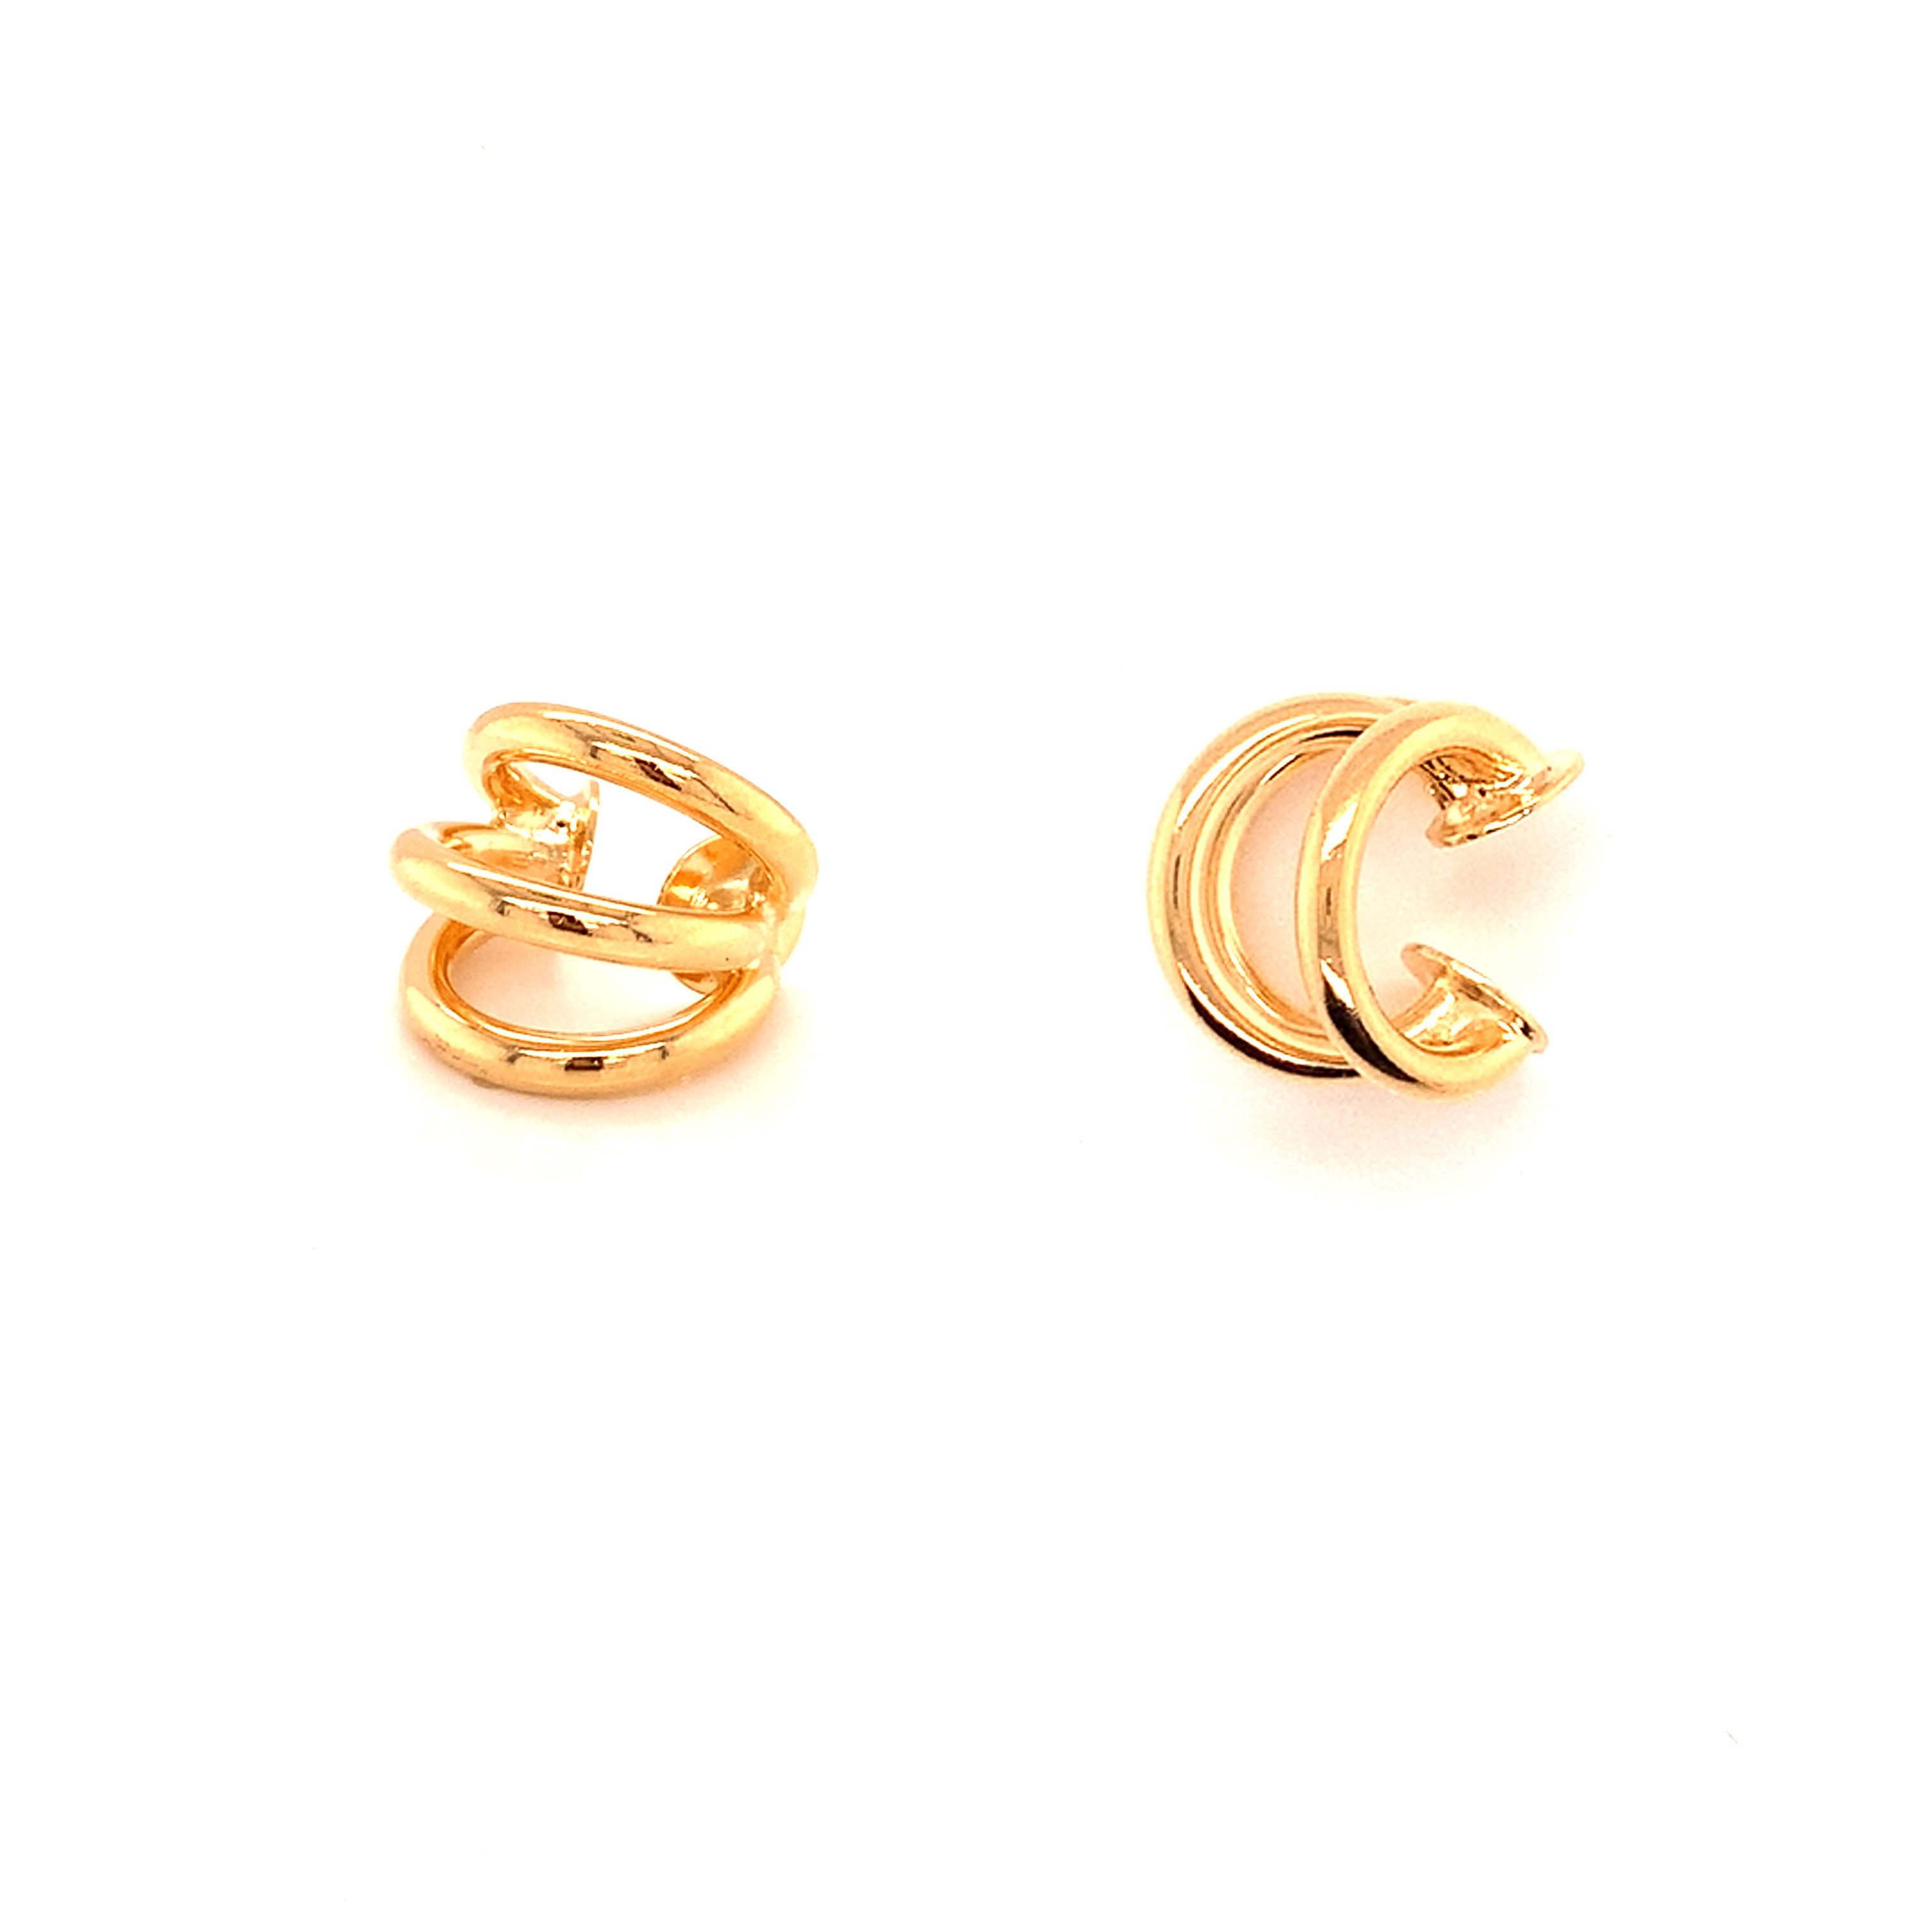 Triple Loop Ear Cuff - Price per piece - Gold Filled